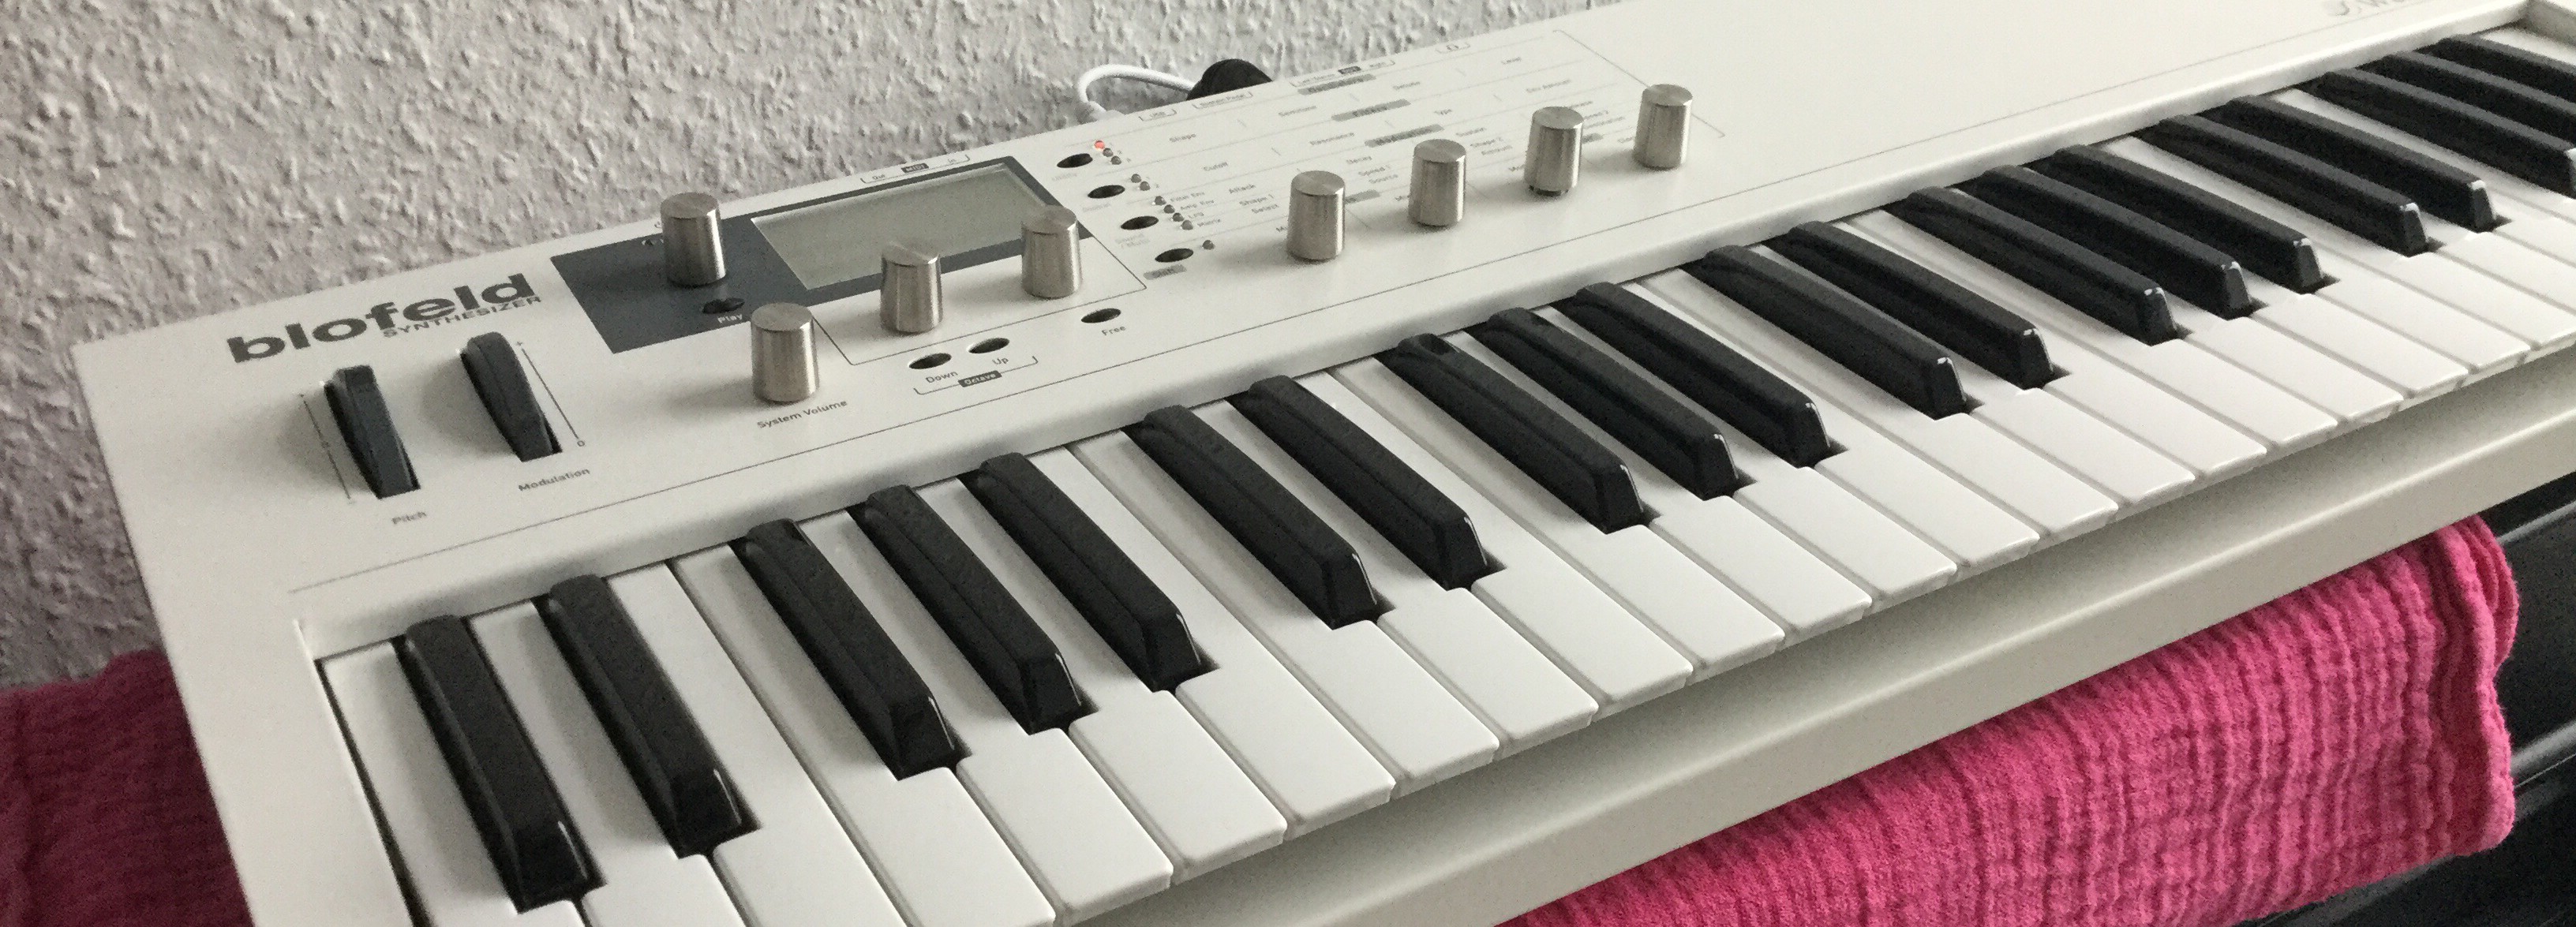 Waldorf Blofeld keyboard white